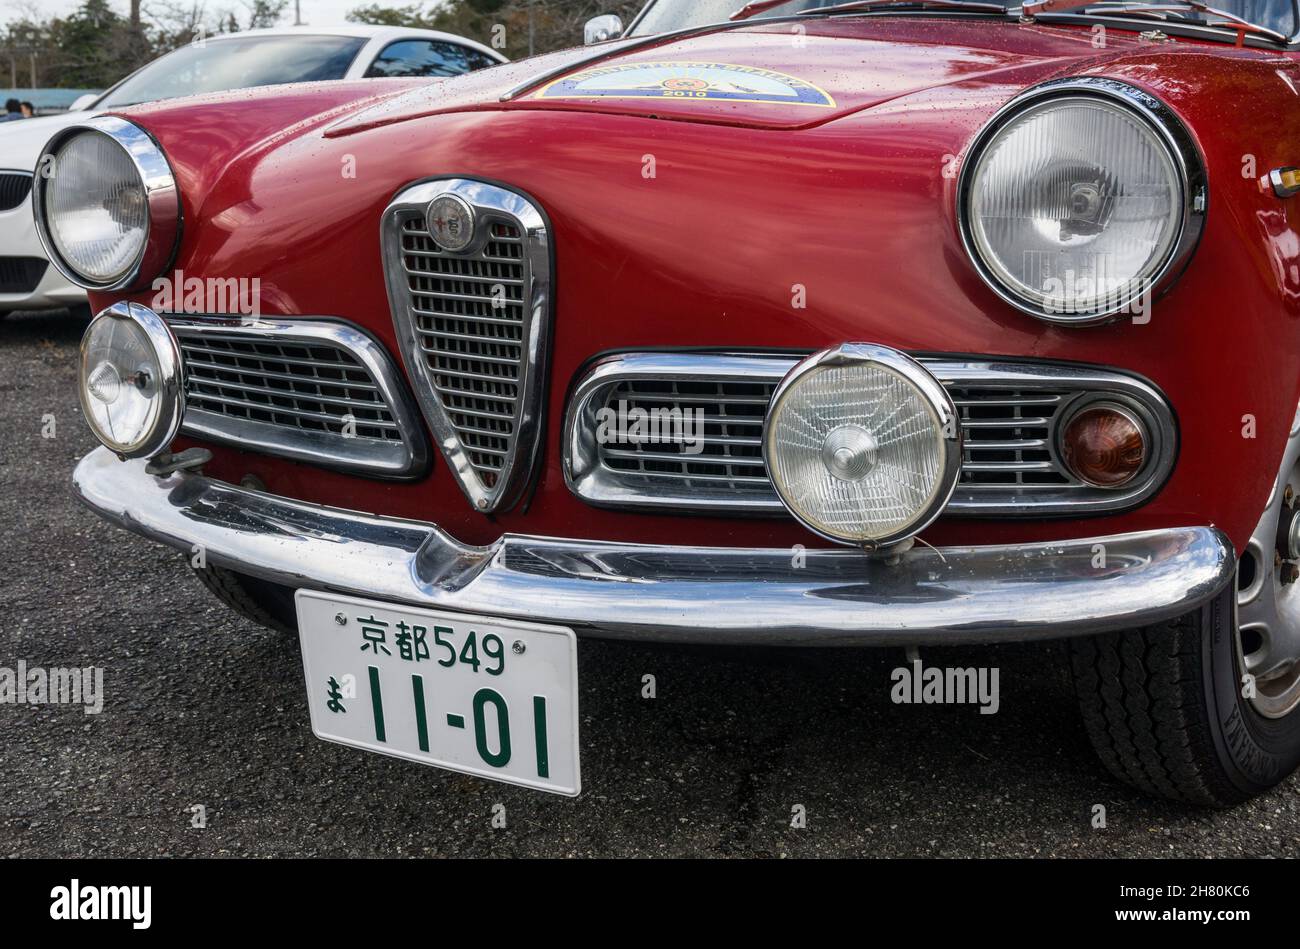 Close up detail of a red Alfa Romeo Giulietta Sprint classic Italian sports car Stock Photo